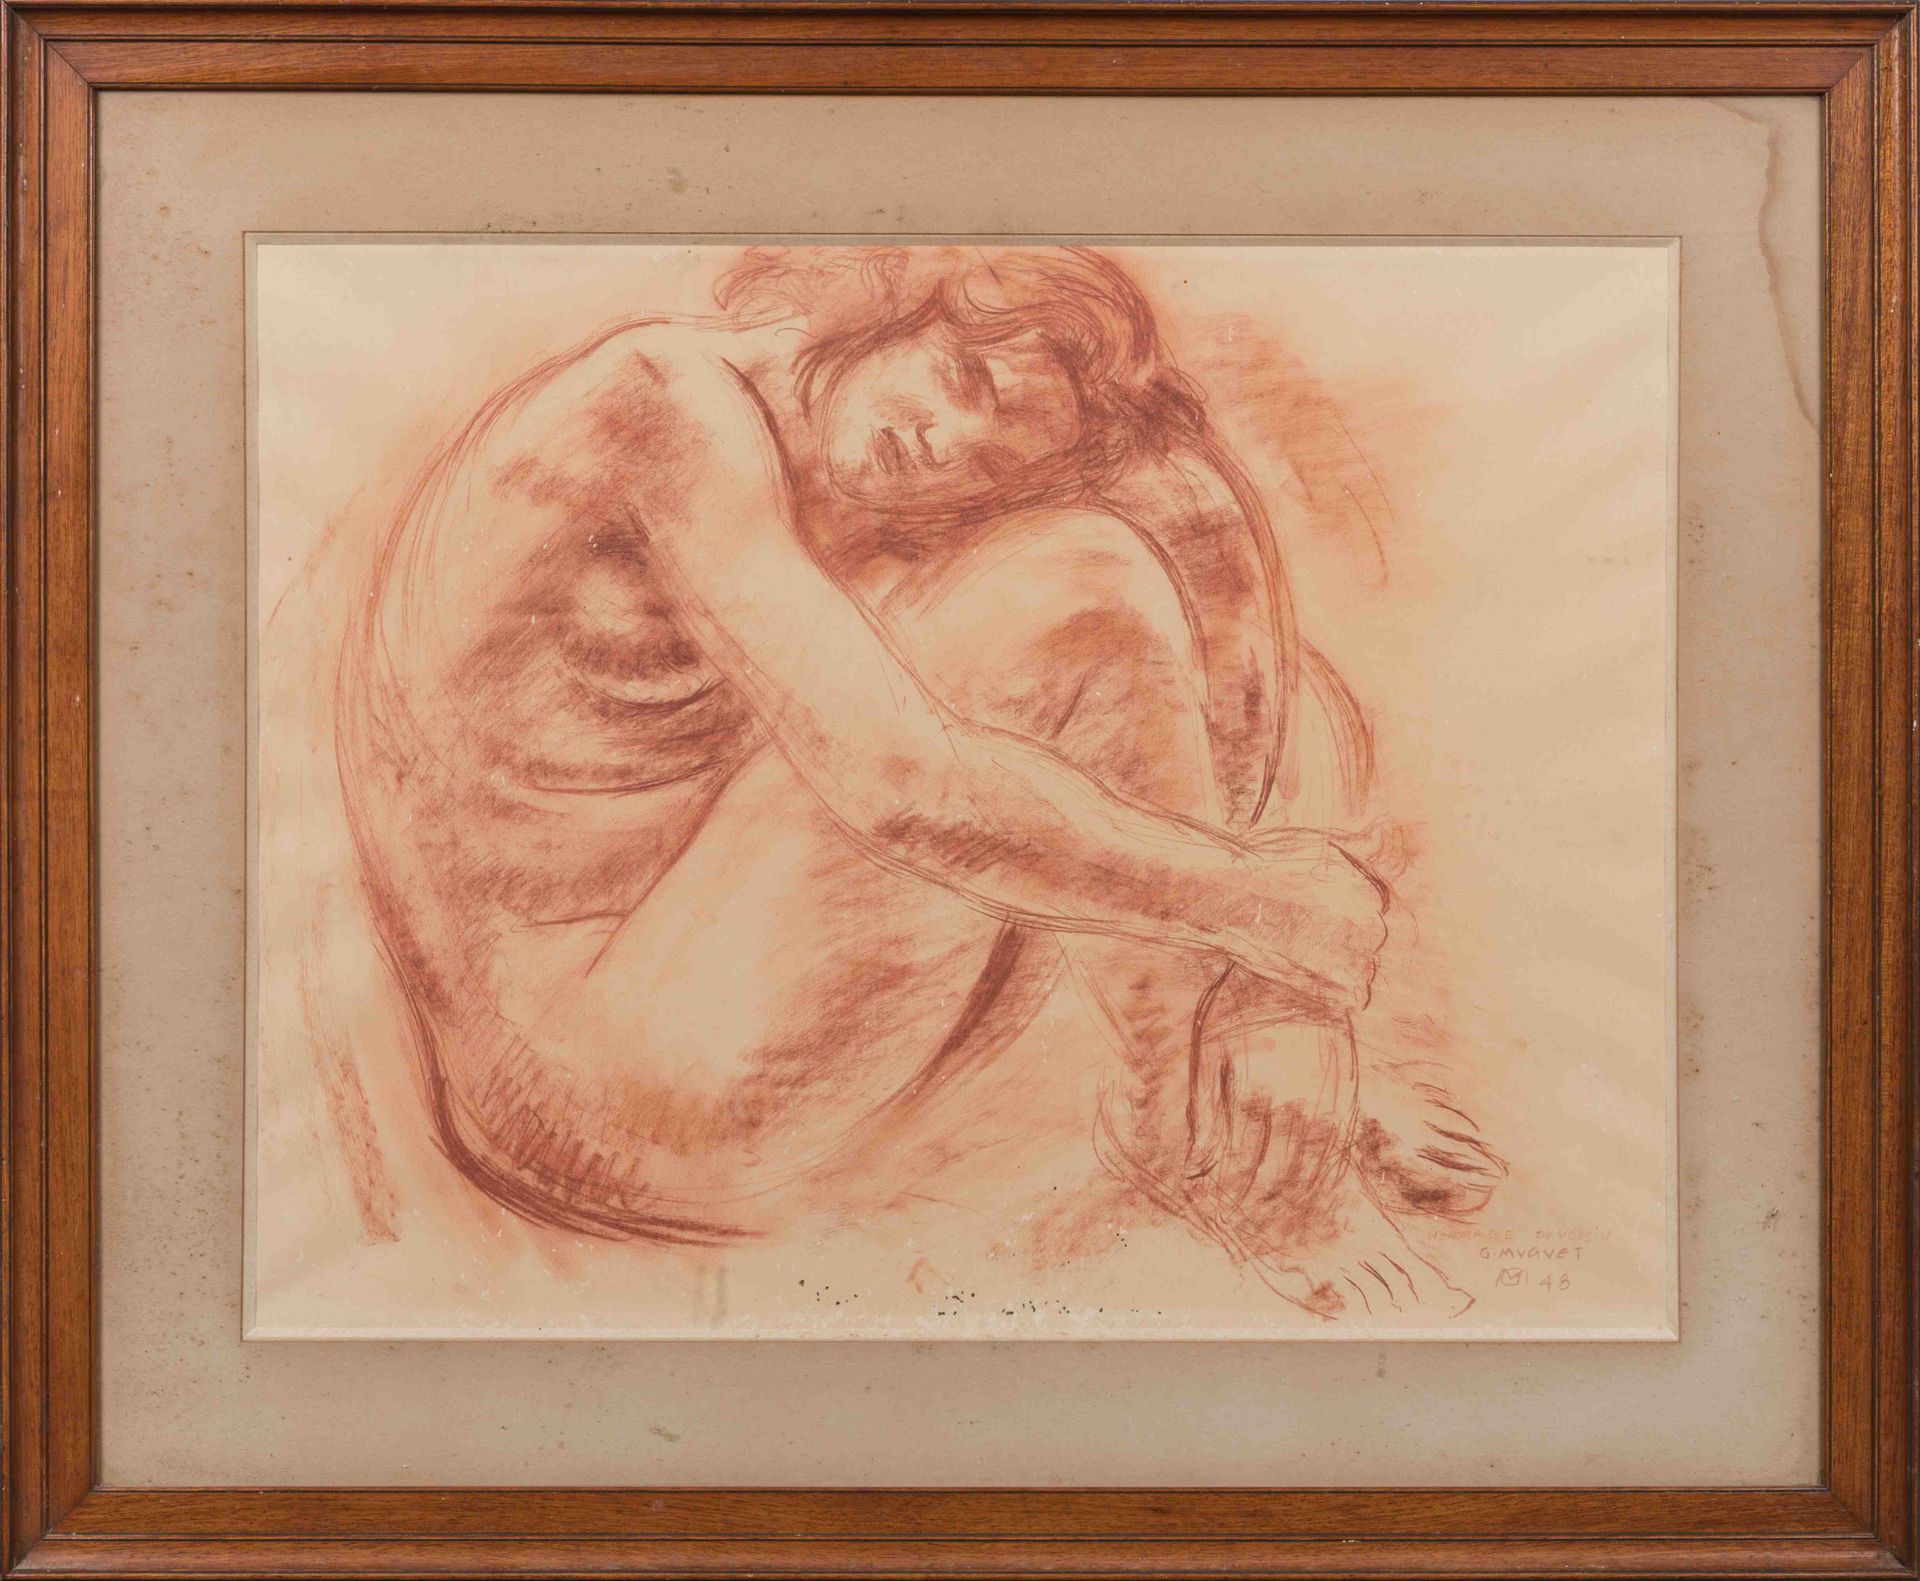 Null Georges MUGUET (1903-1988)

"Homenaje del vecino" - Desnudo femenino. 

San&hellip;